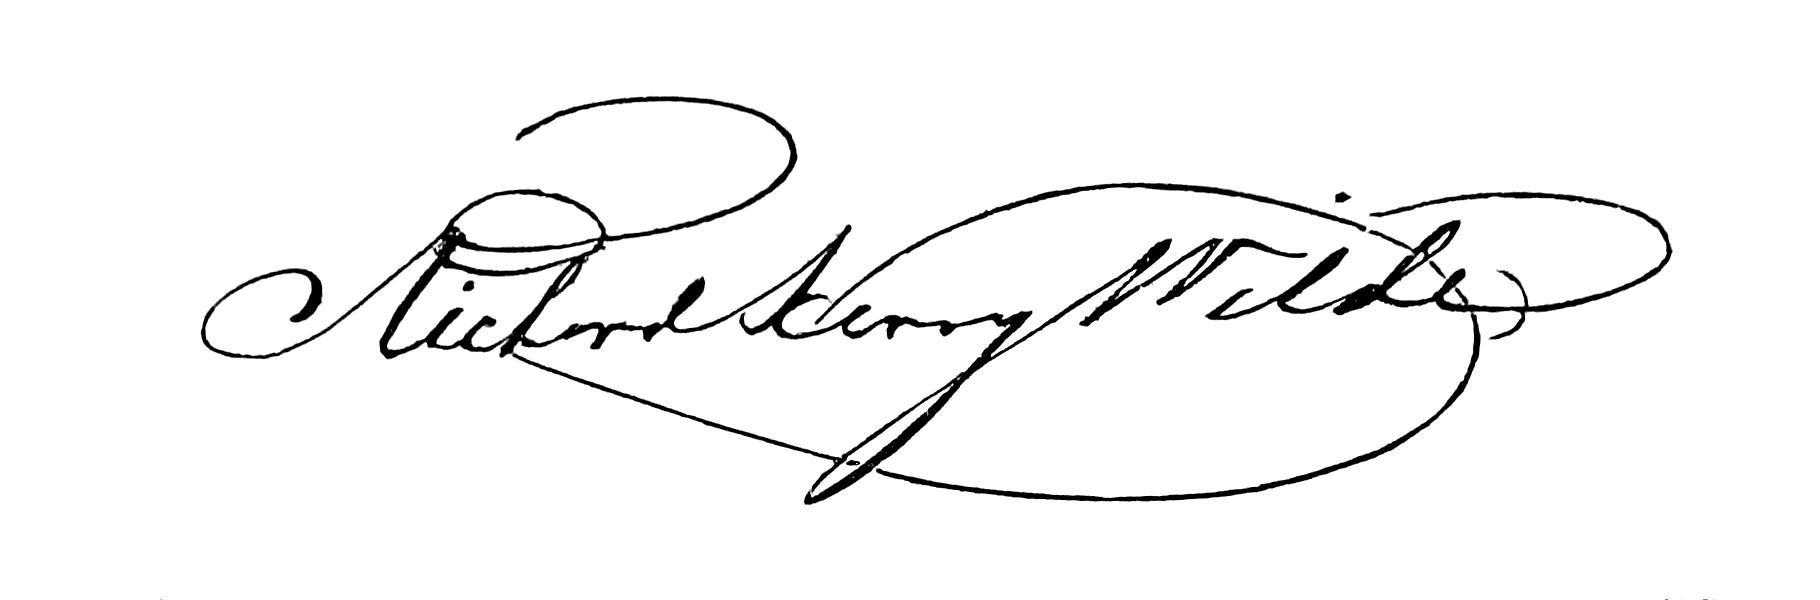 Signature of Richard Henry Wilde